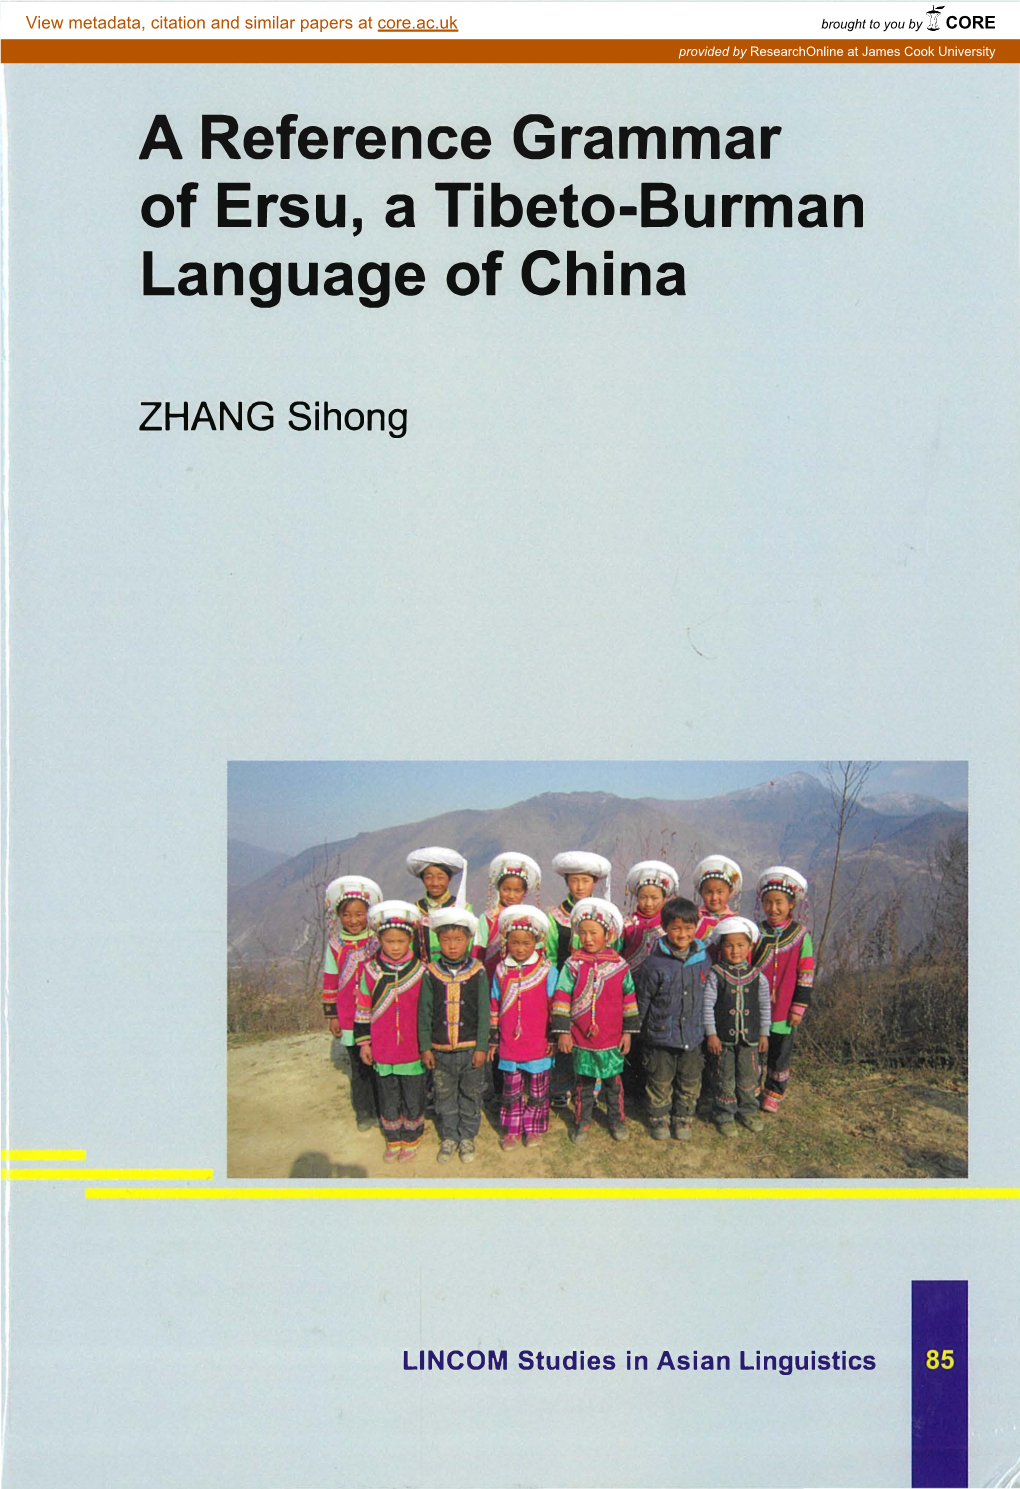 A Reference Grammar of Ersu, a Tibeto-Burman Language of China